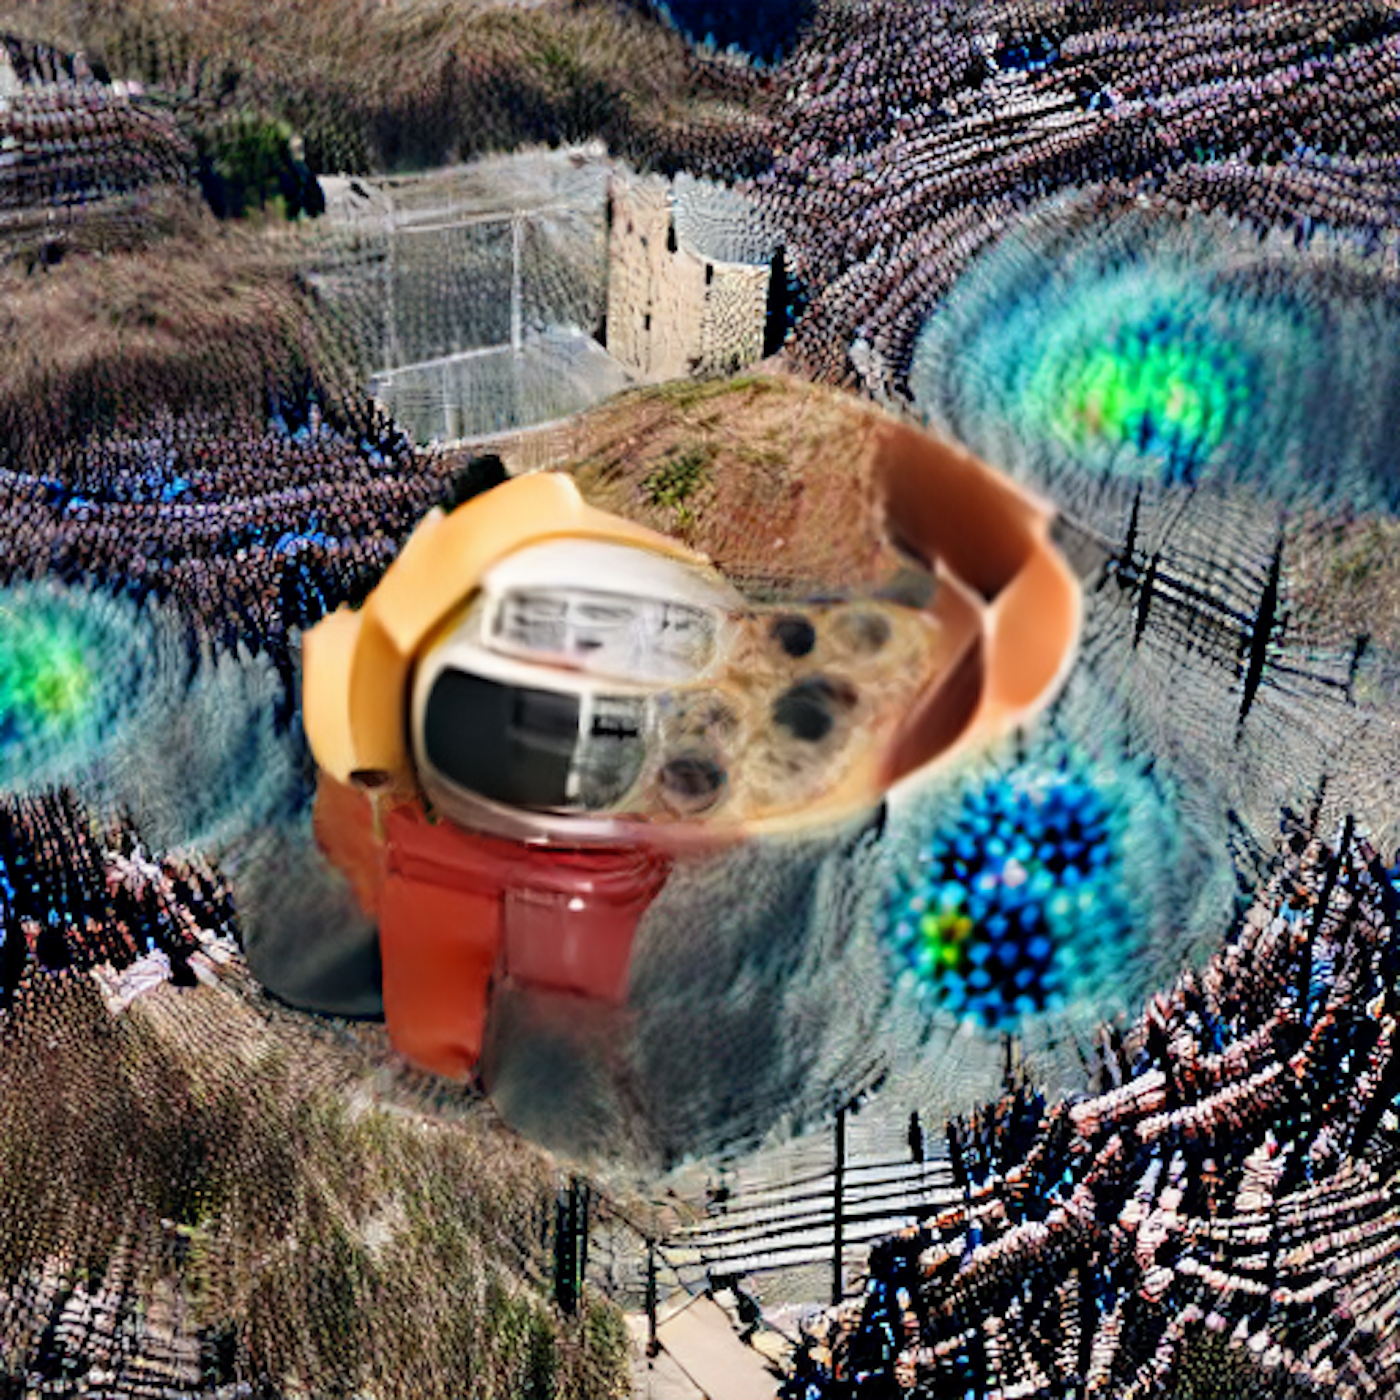 This is Neutrinowatch